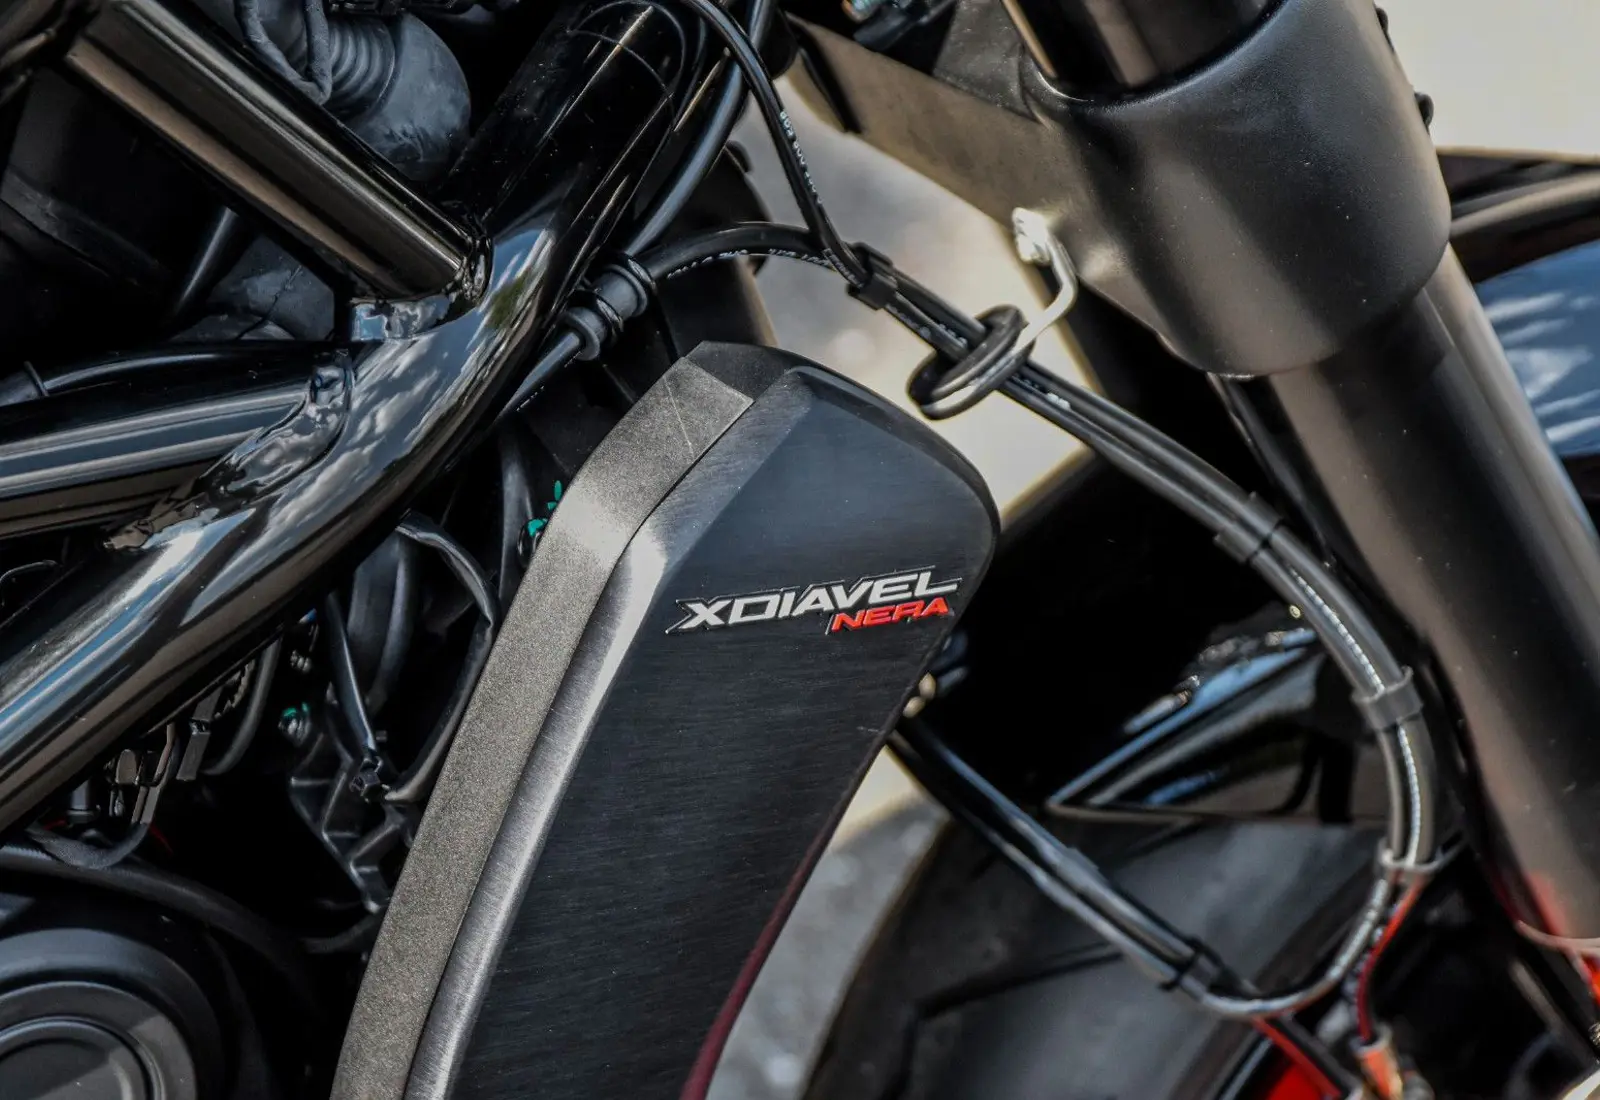 Ducati X-Diavel Nera * POLTRONA FRAU * 1 OF 500 * LIMITED ED - 41968